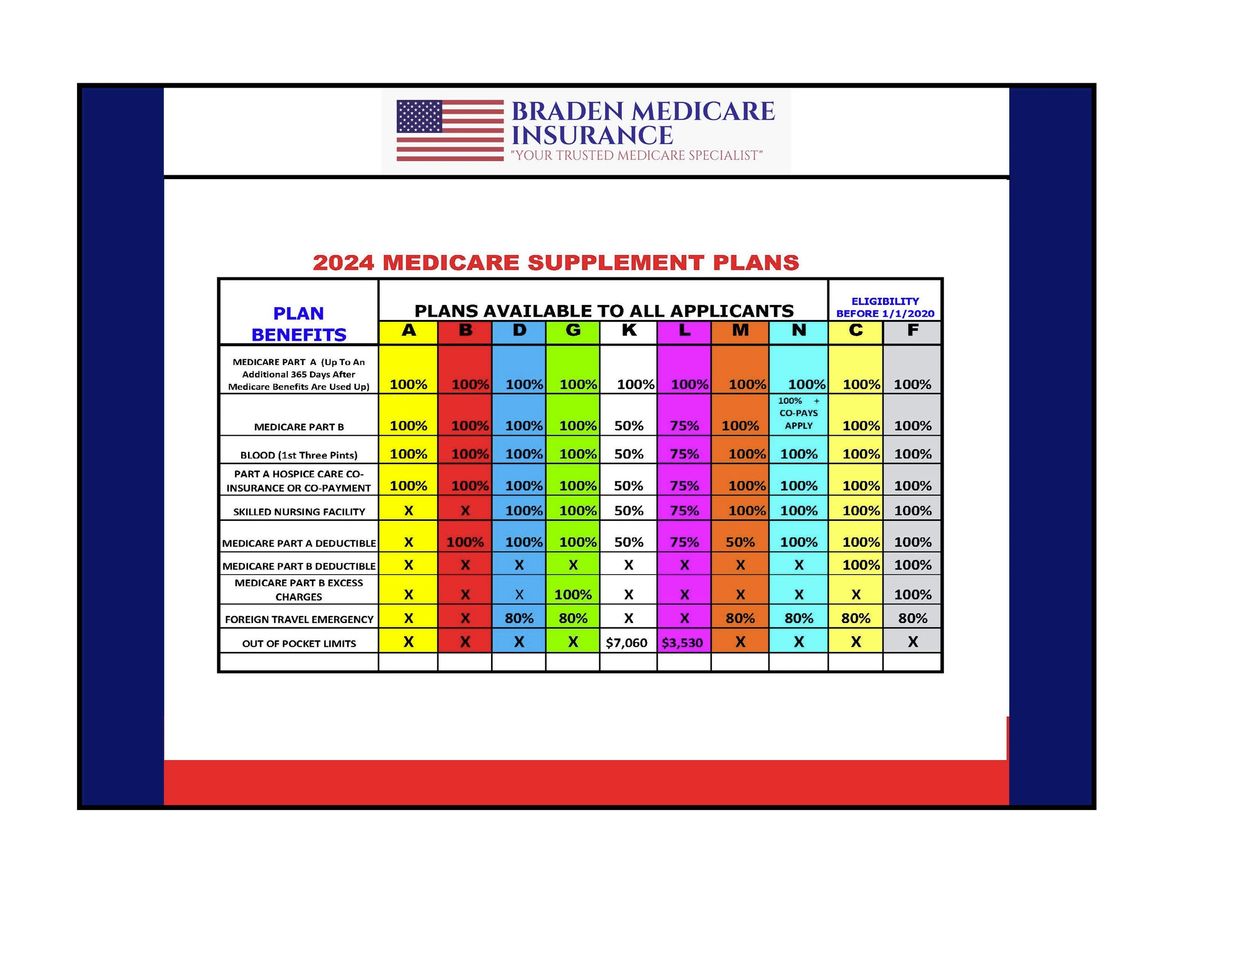 Braden Medicare Insurance 2024 Medicare Supplement Plan Comparison Chart #Medicare Supplement Plans